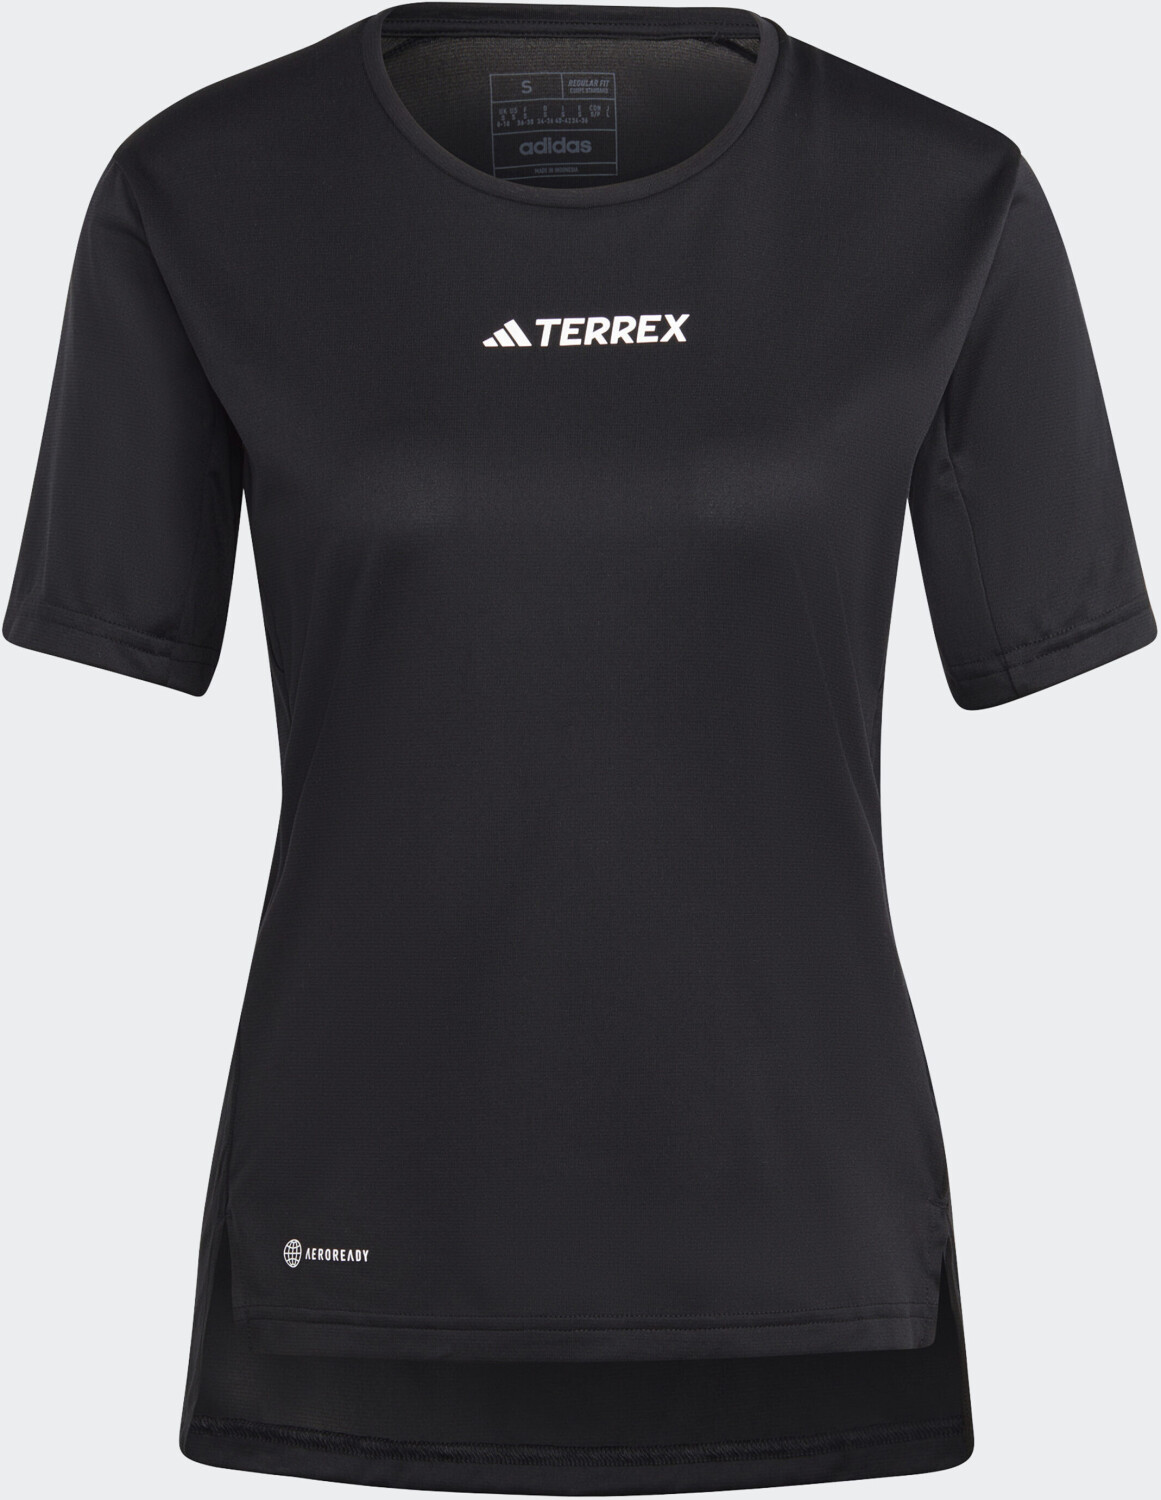 bei | € (HM4041) 25,99 Preisvergleich Multi T-Shirt Adidas ab TERREX black